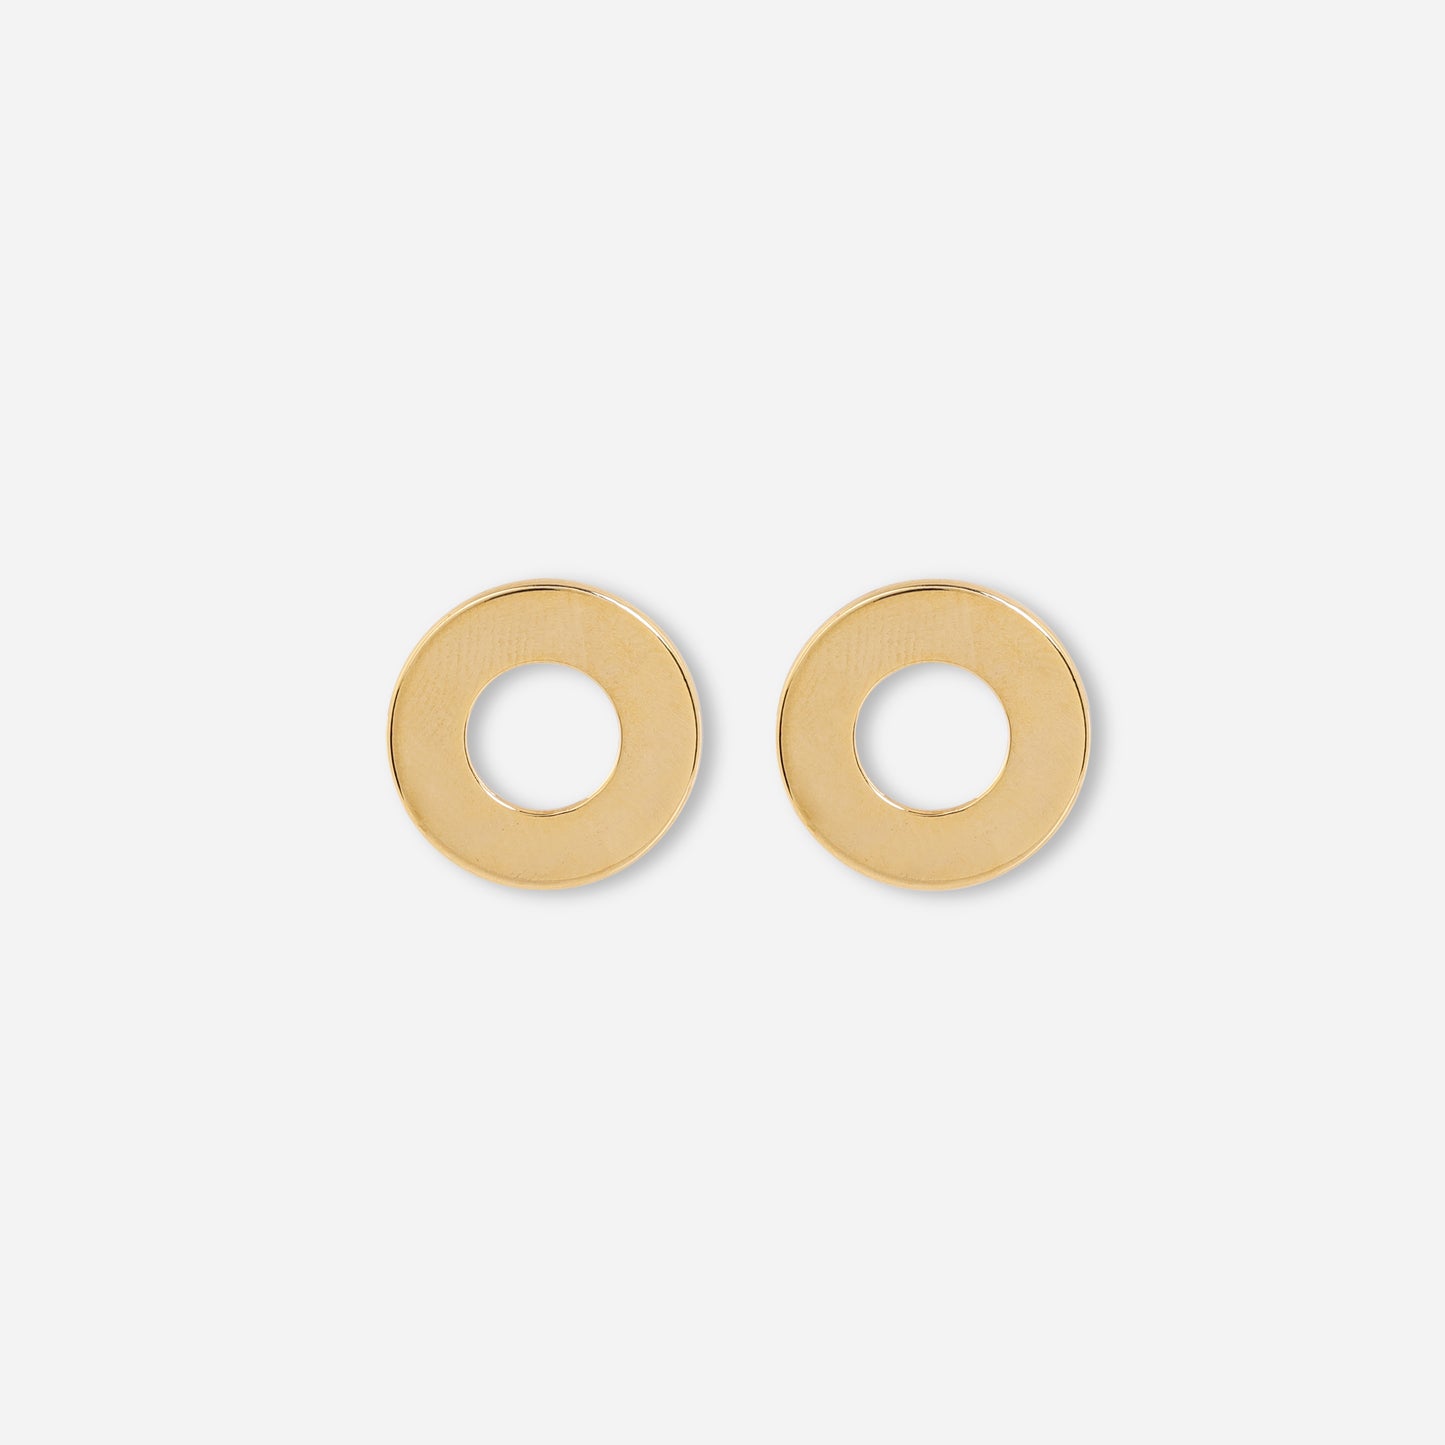 Gold circular stud earrings